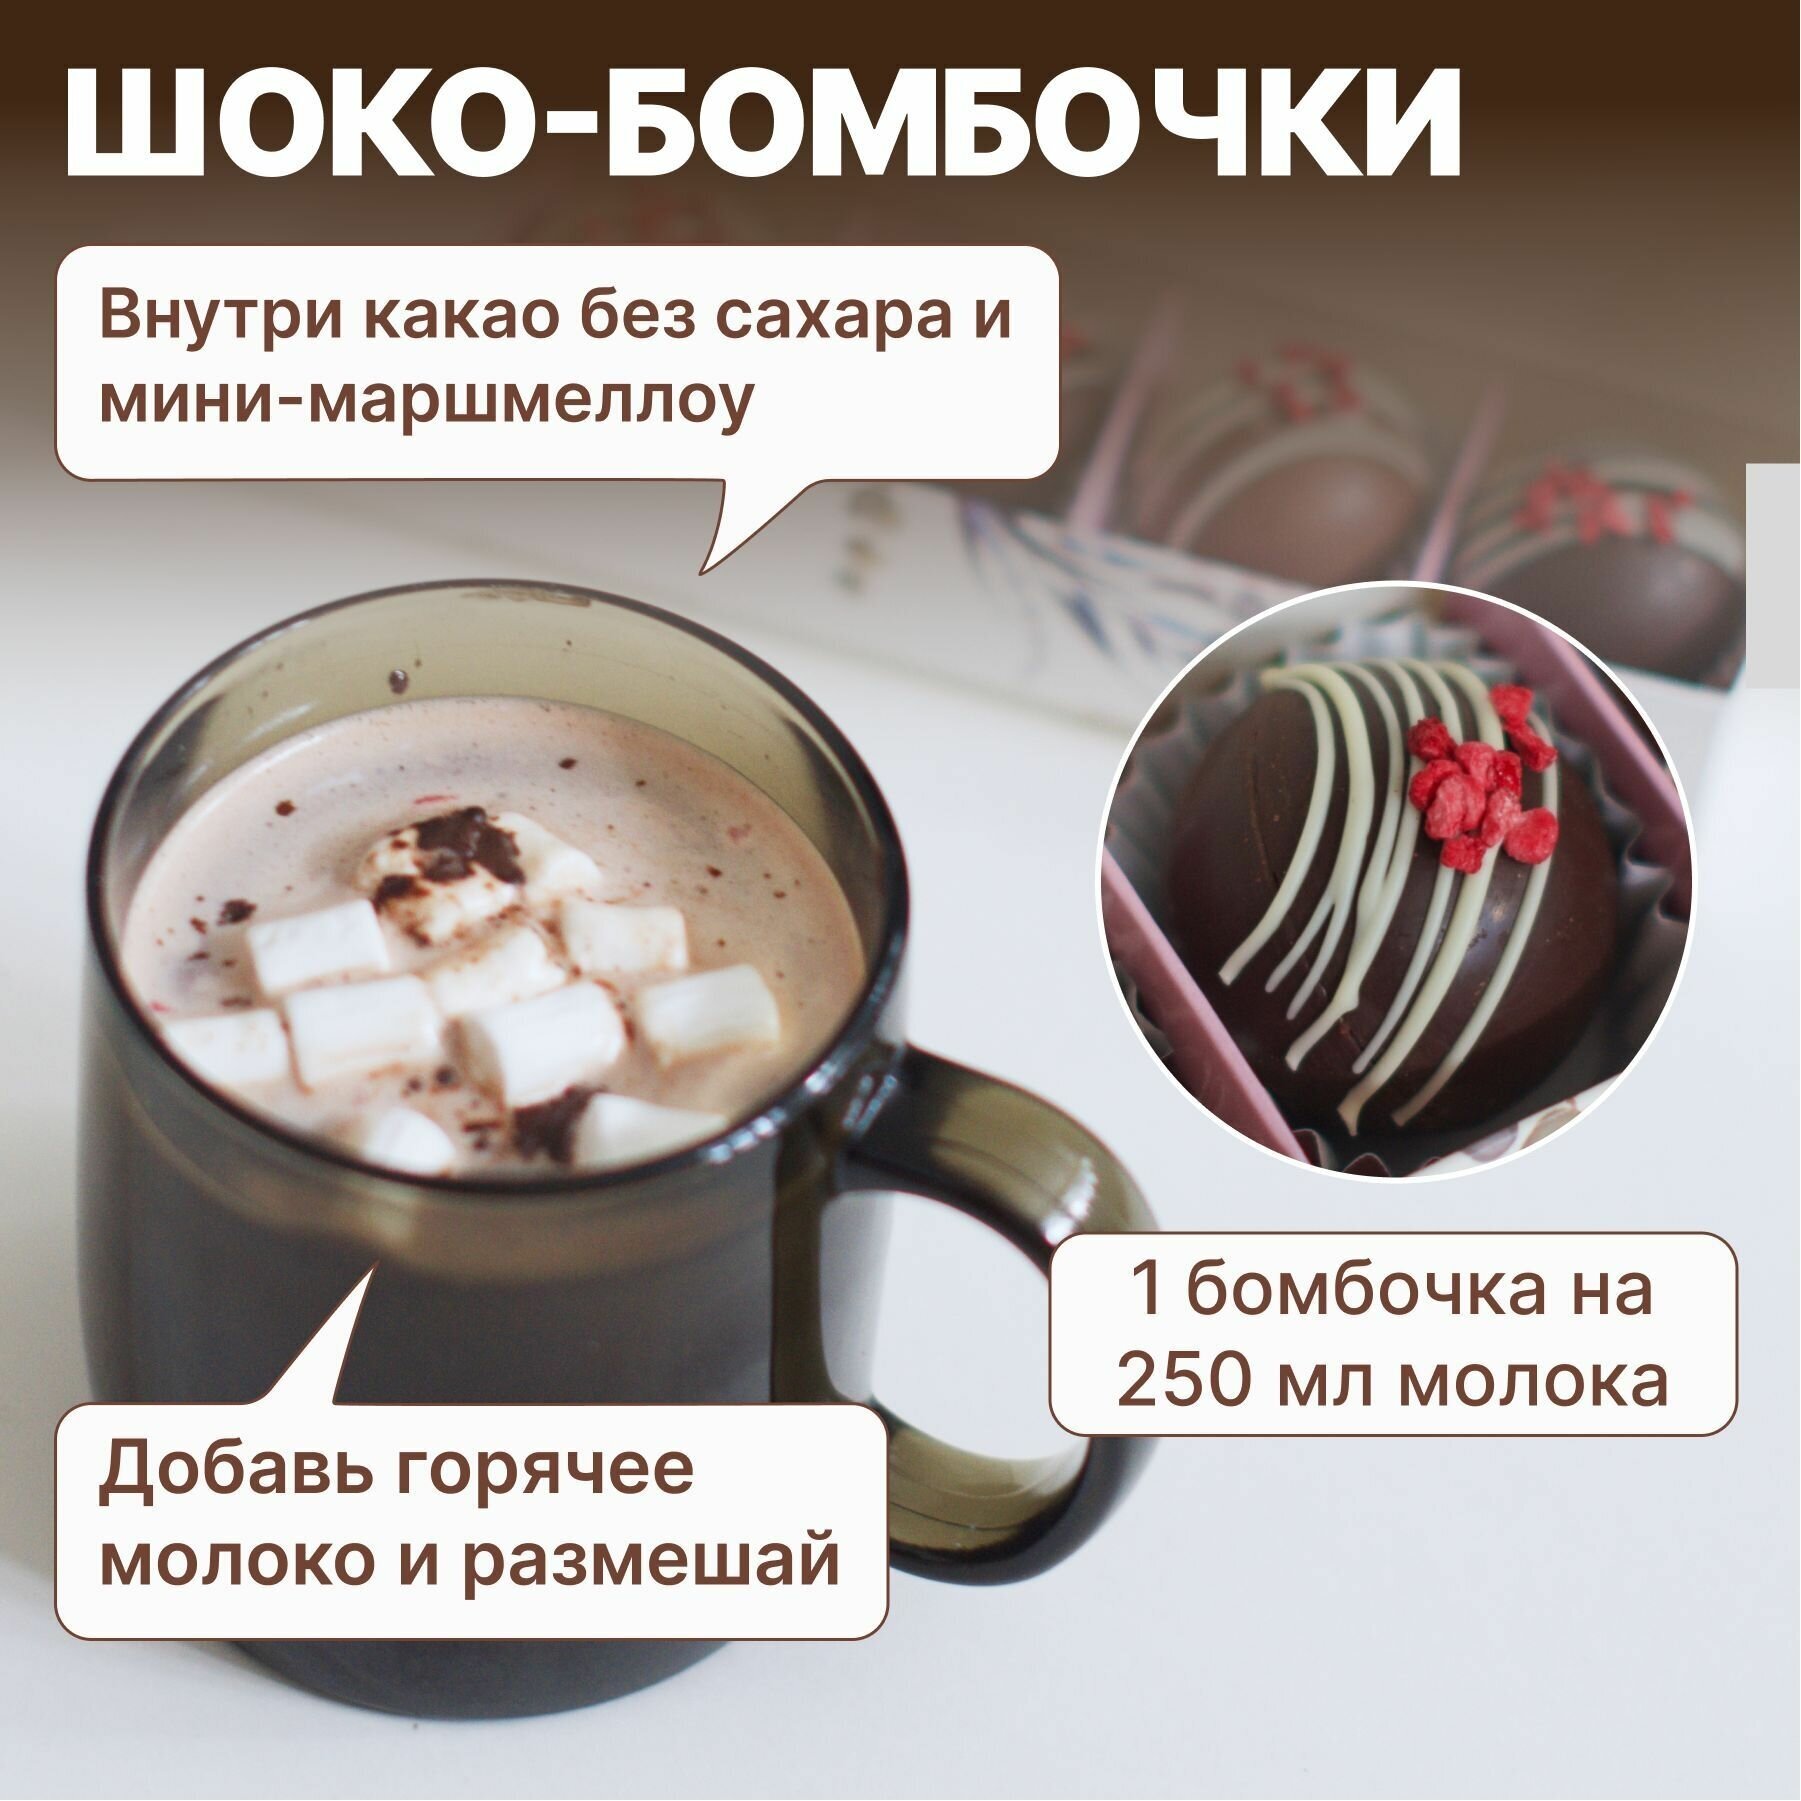 Шоколадные бомбочки CoffeeBook с какао и маршмелоу. - фотография № 3